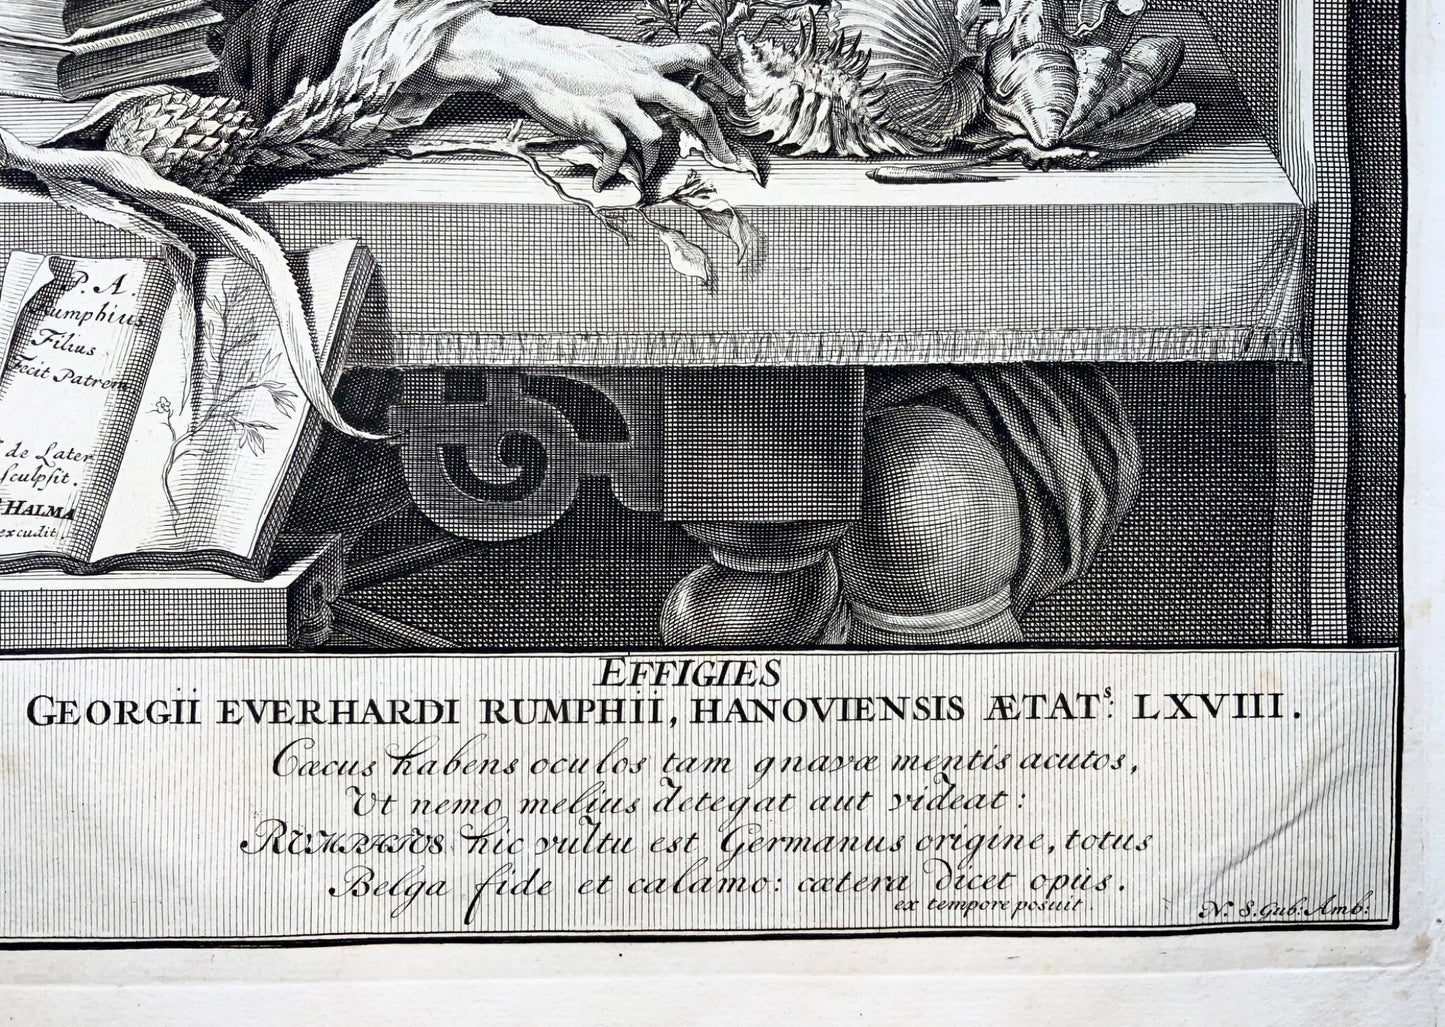 1741 Ritratto di Georg Eberhard Rumphius, naturalista, botanico, foglio grande, wunderkammer,